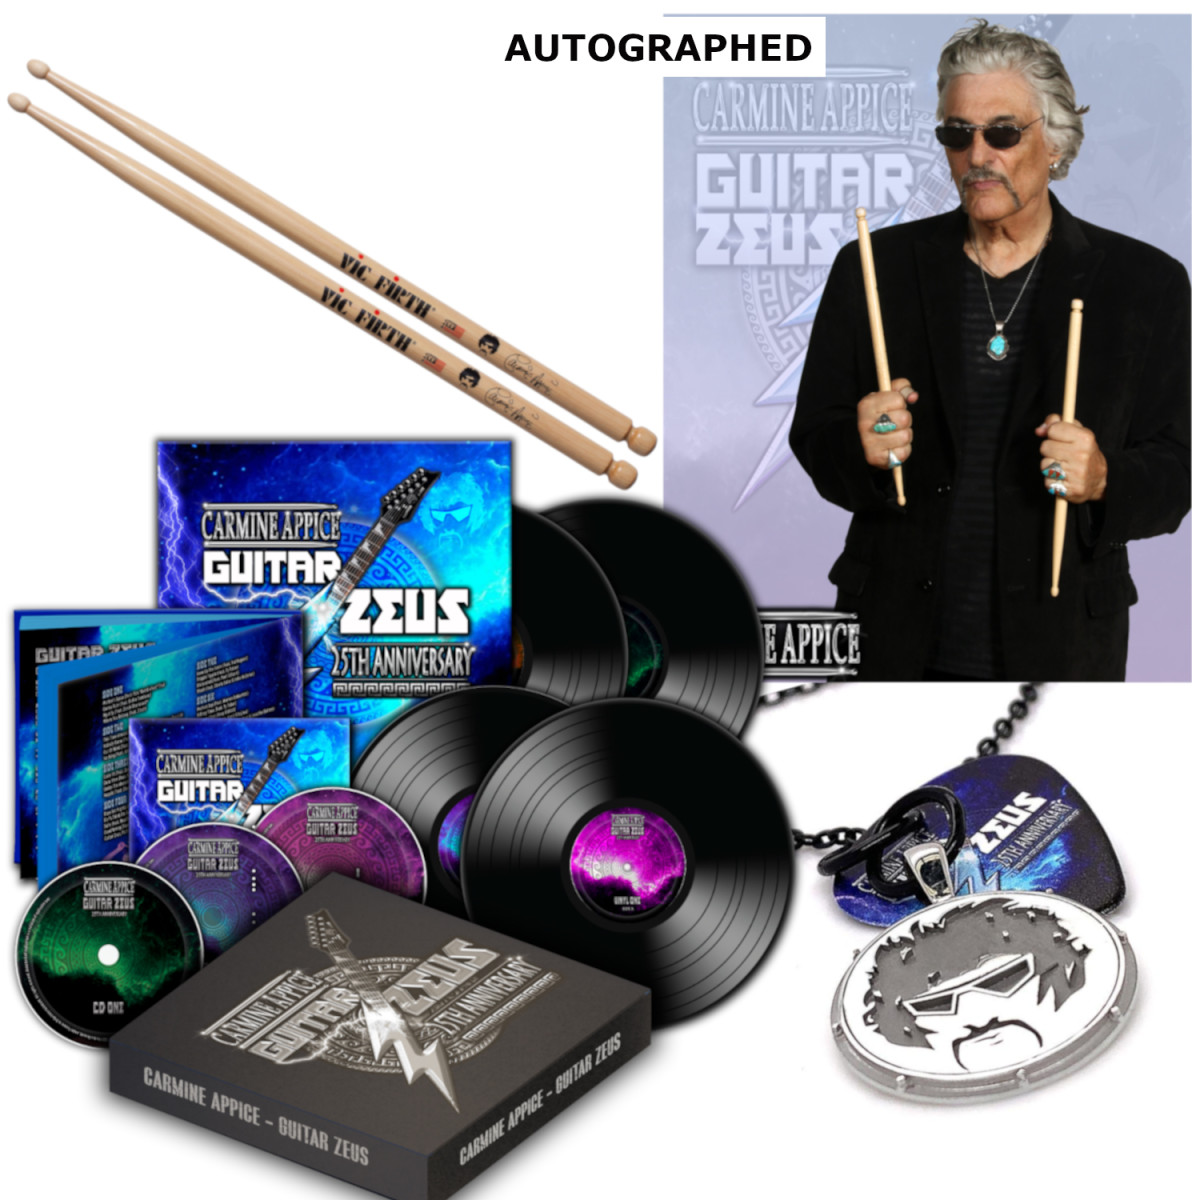 The Guitar Zeus 25th Anniversary Box Set